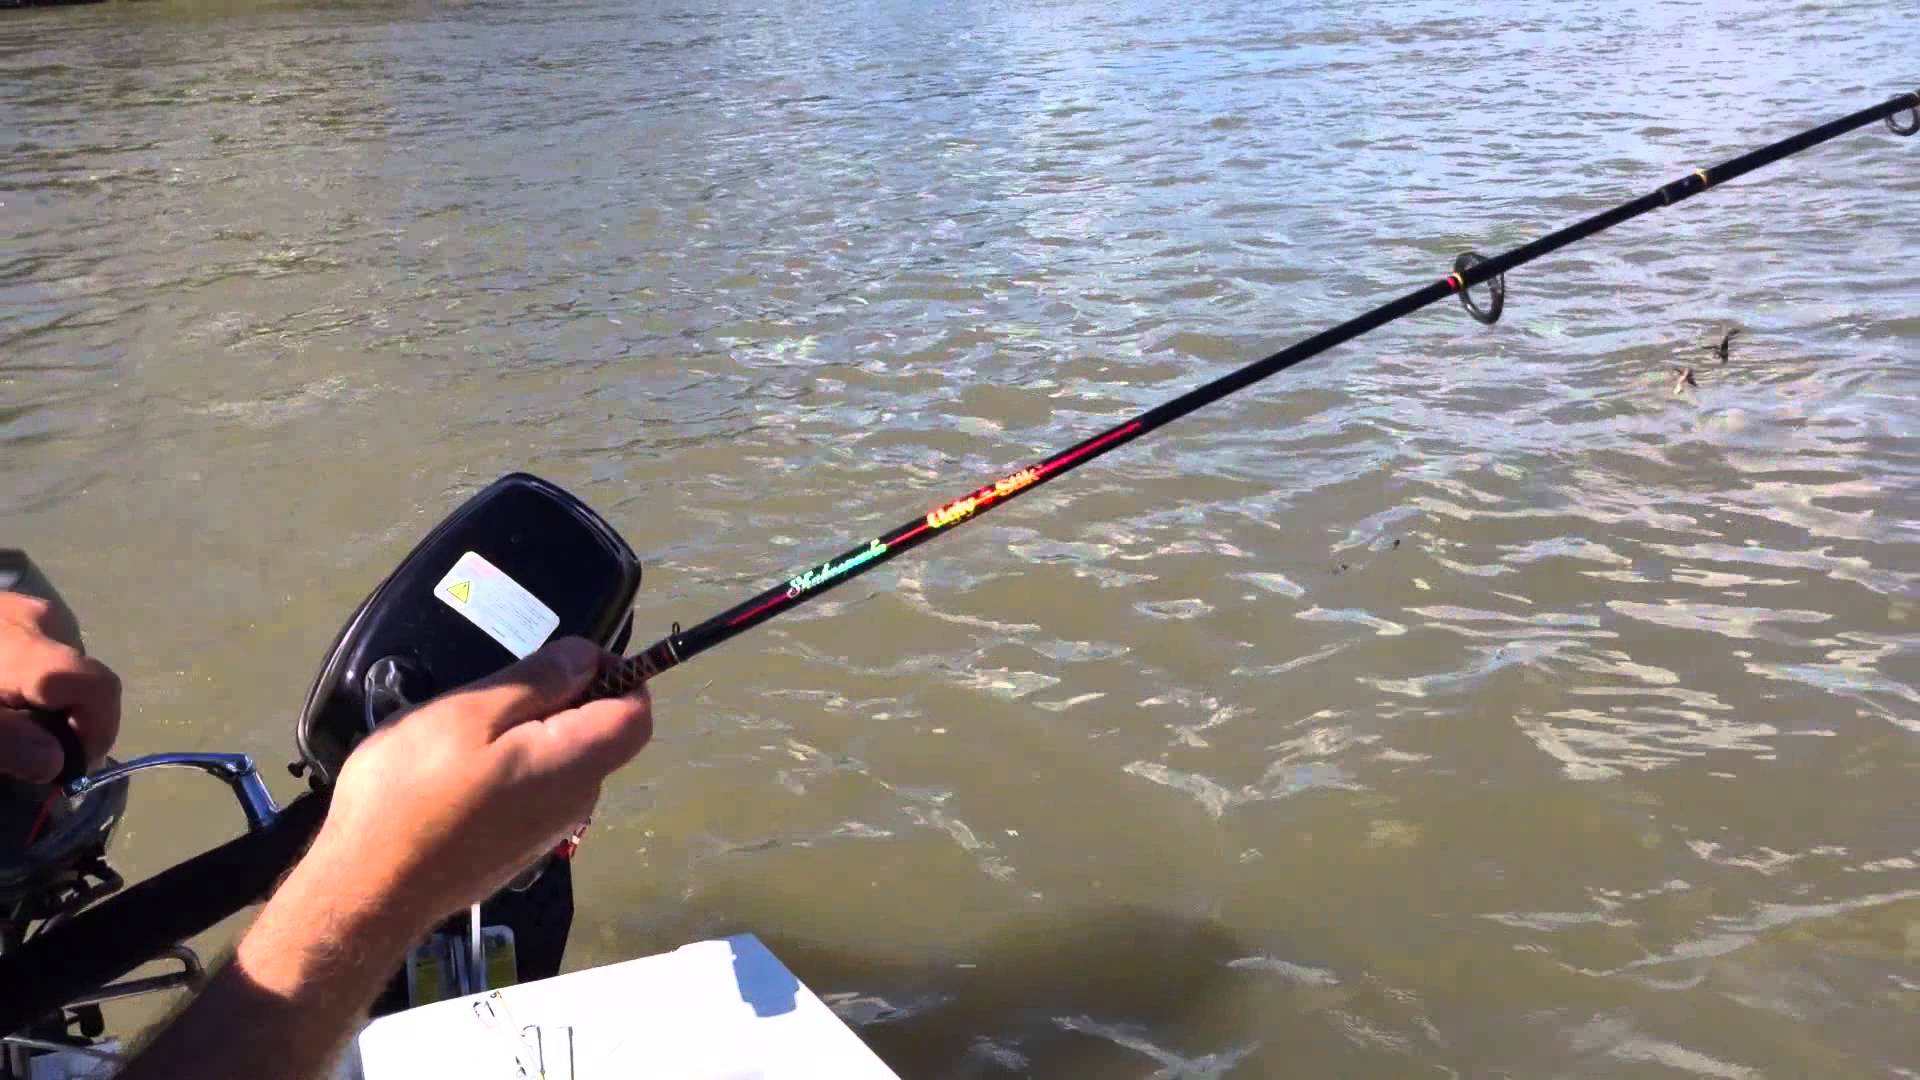 Sturgeon on Ultra-light fishing gear - Fishin' with Jimmy - YouTube